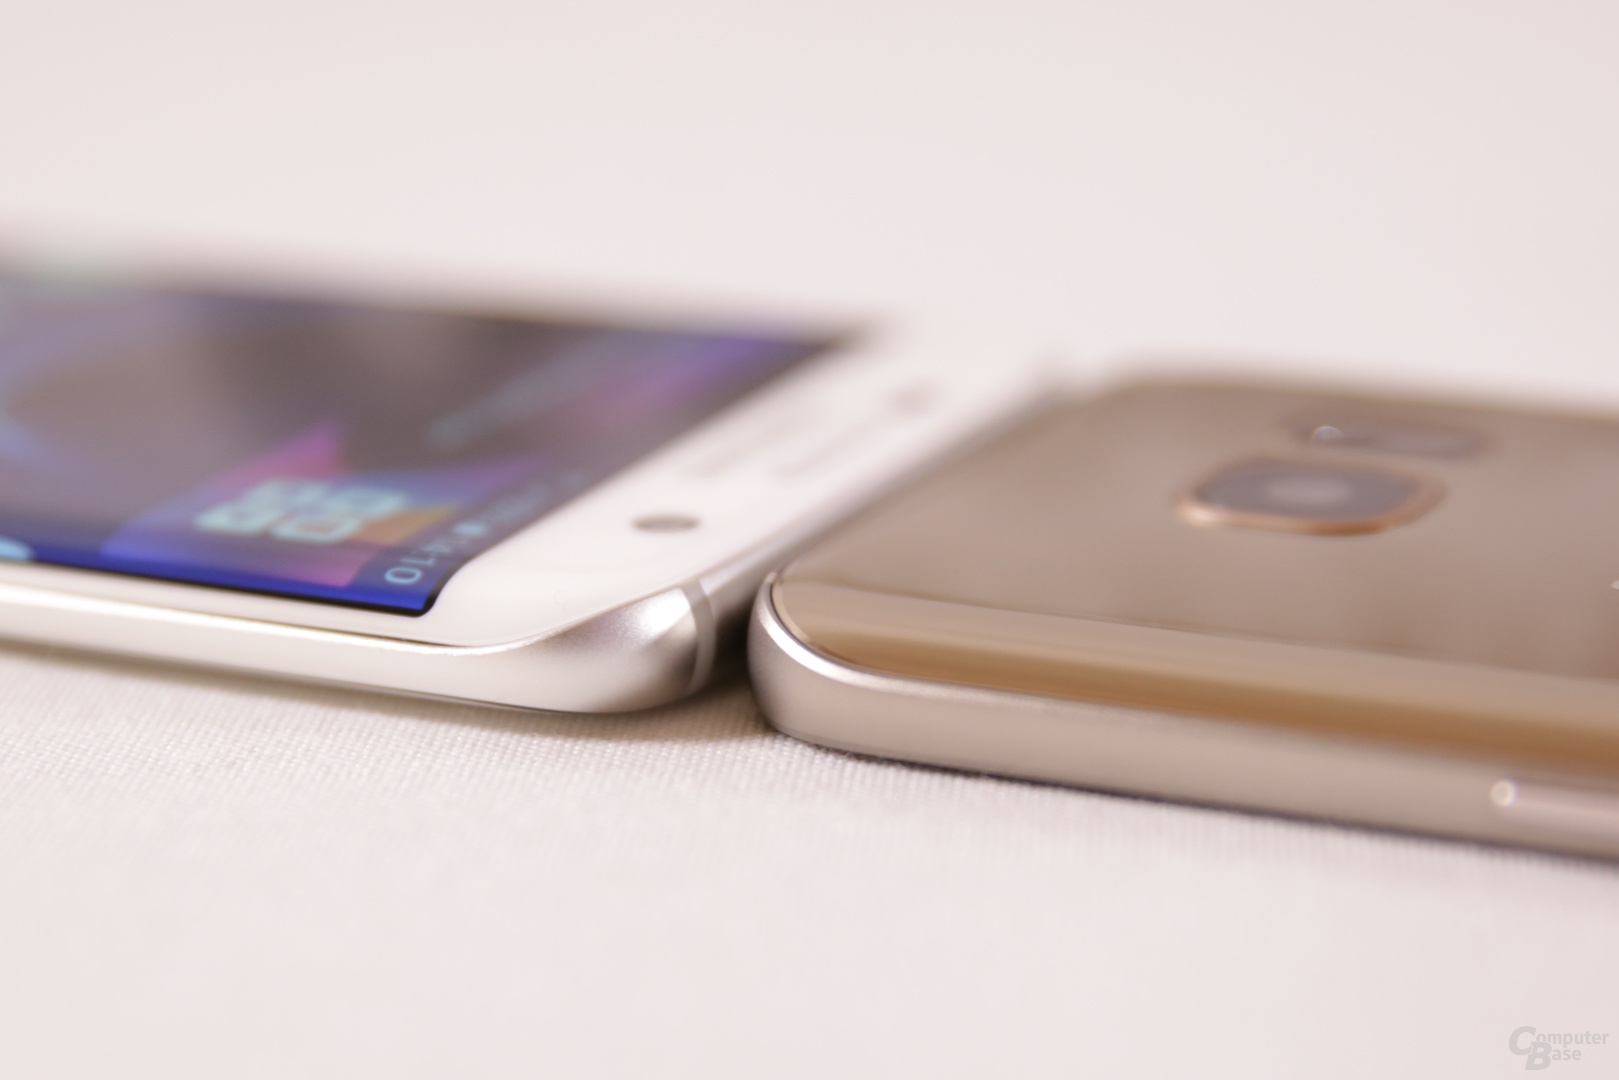 Galaxy S7 edge in Weiß, Galaxy S7 in Gold